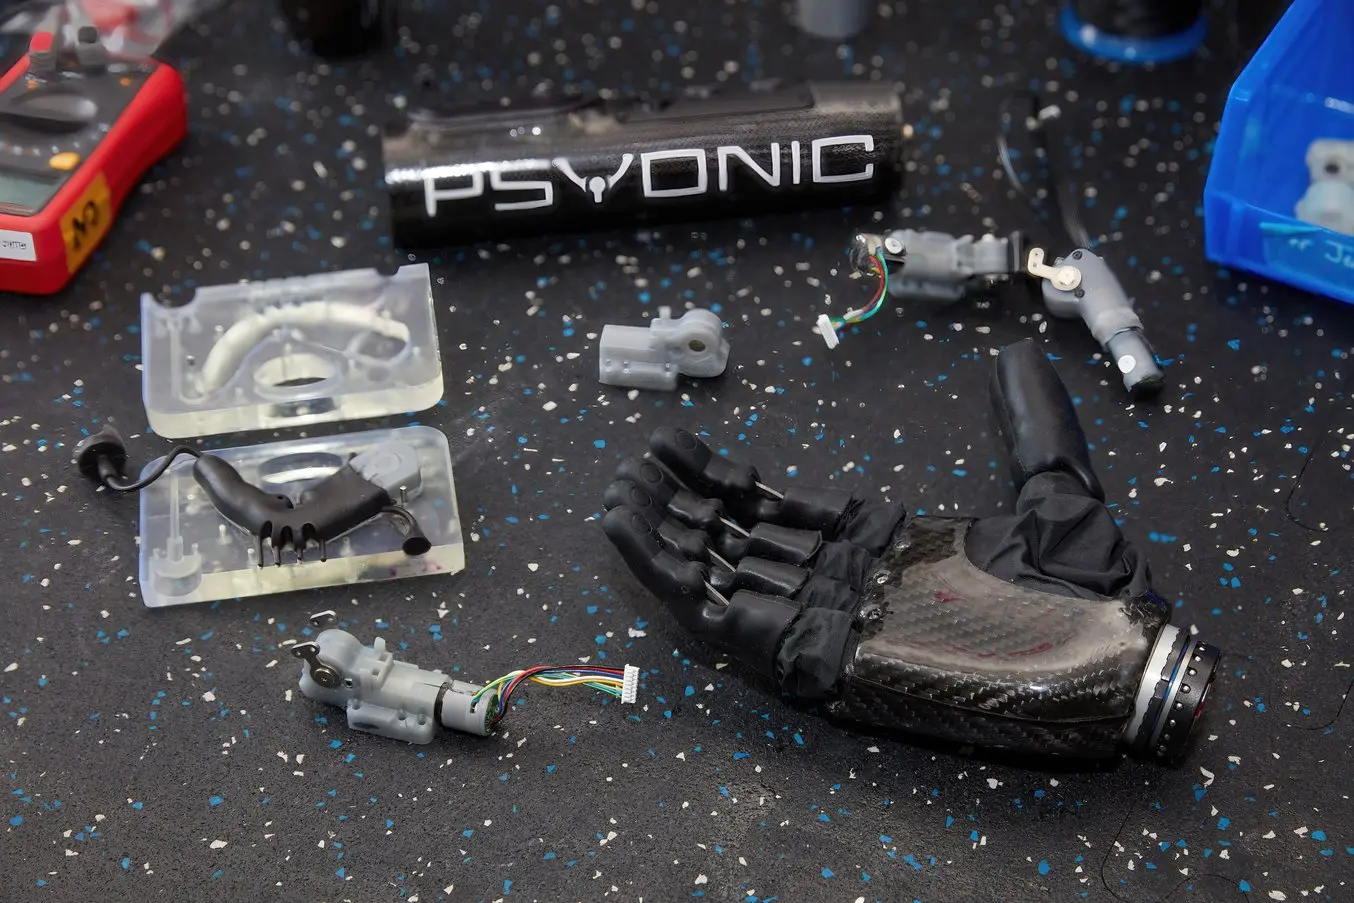 Psyonic 公司使用硅胶嵌模成型制造义肢手指。